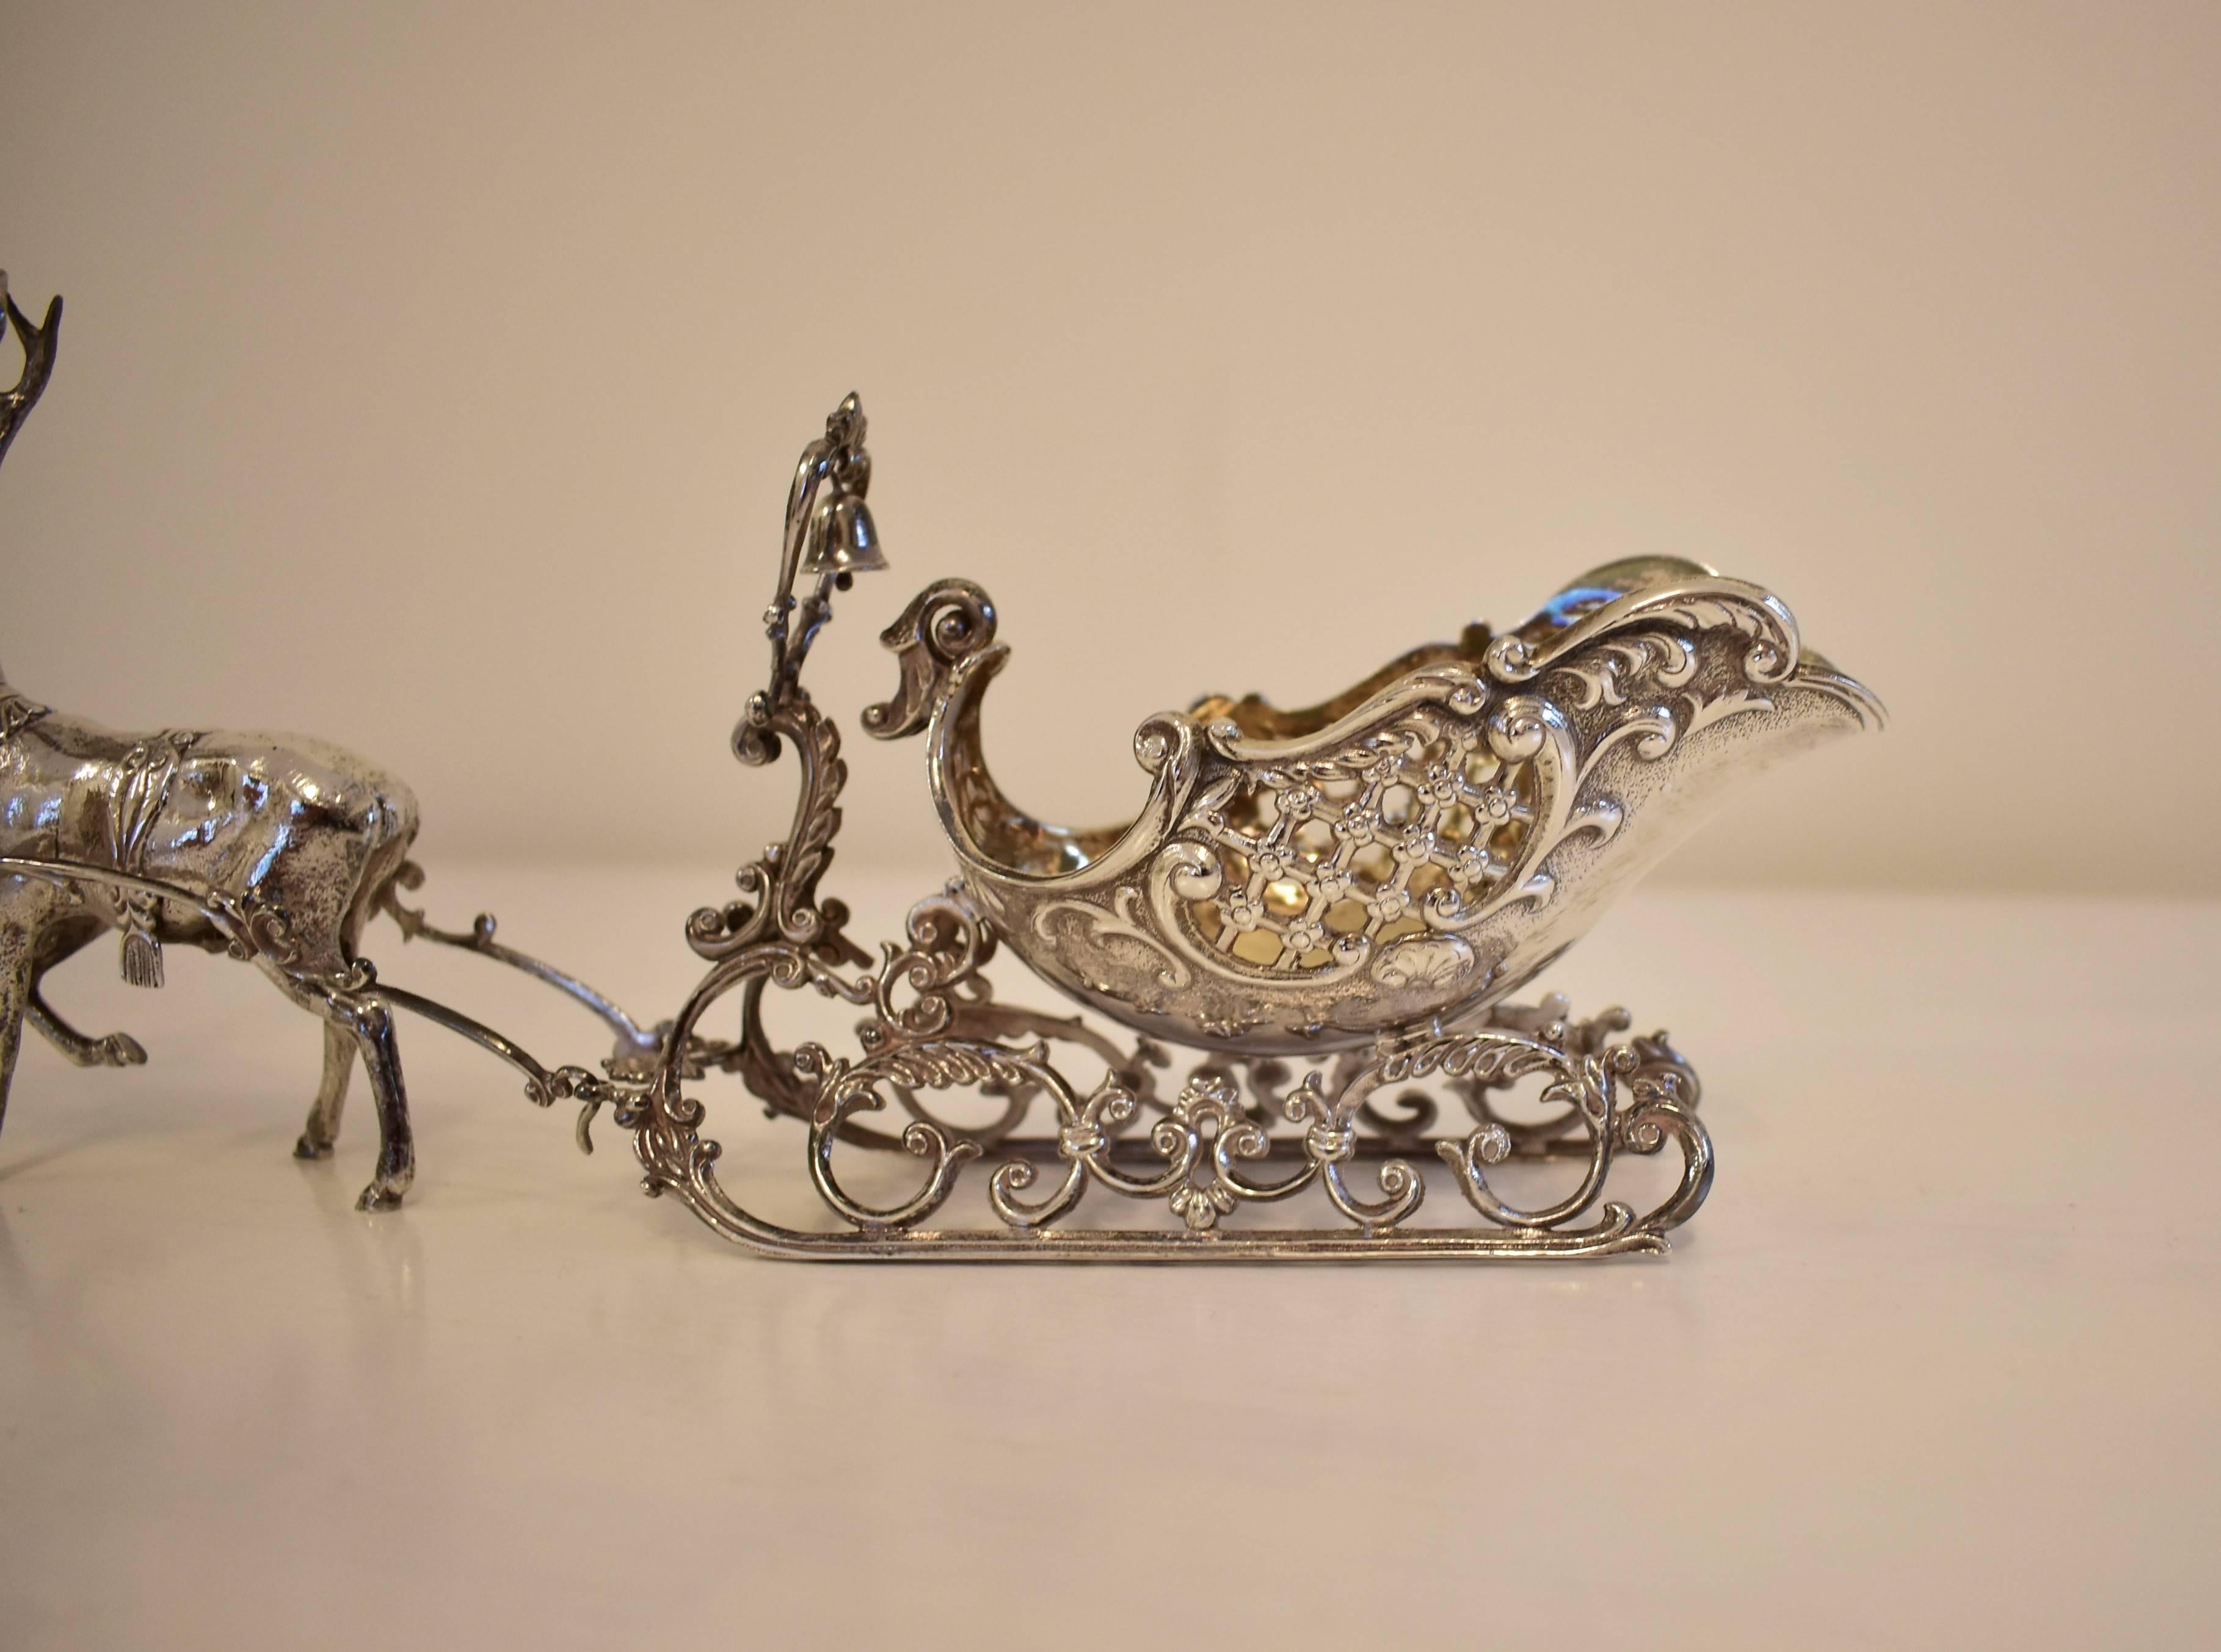 Cast 20th Century Silver Sleigh and Reindeer with Gilt Detail, Objet d'Art, Sculpture